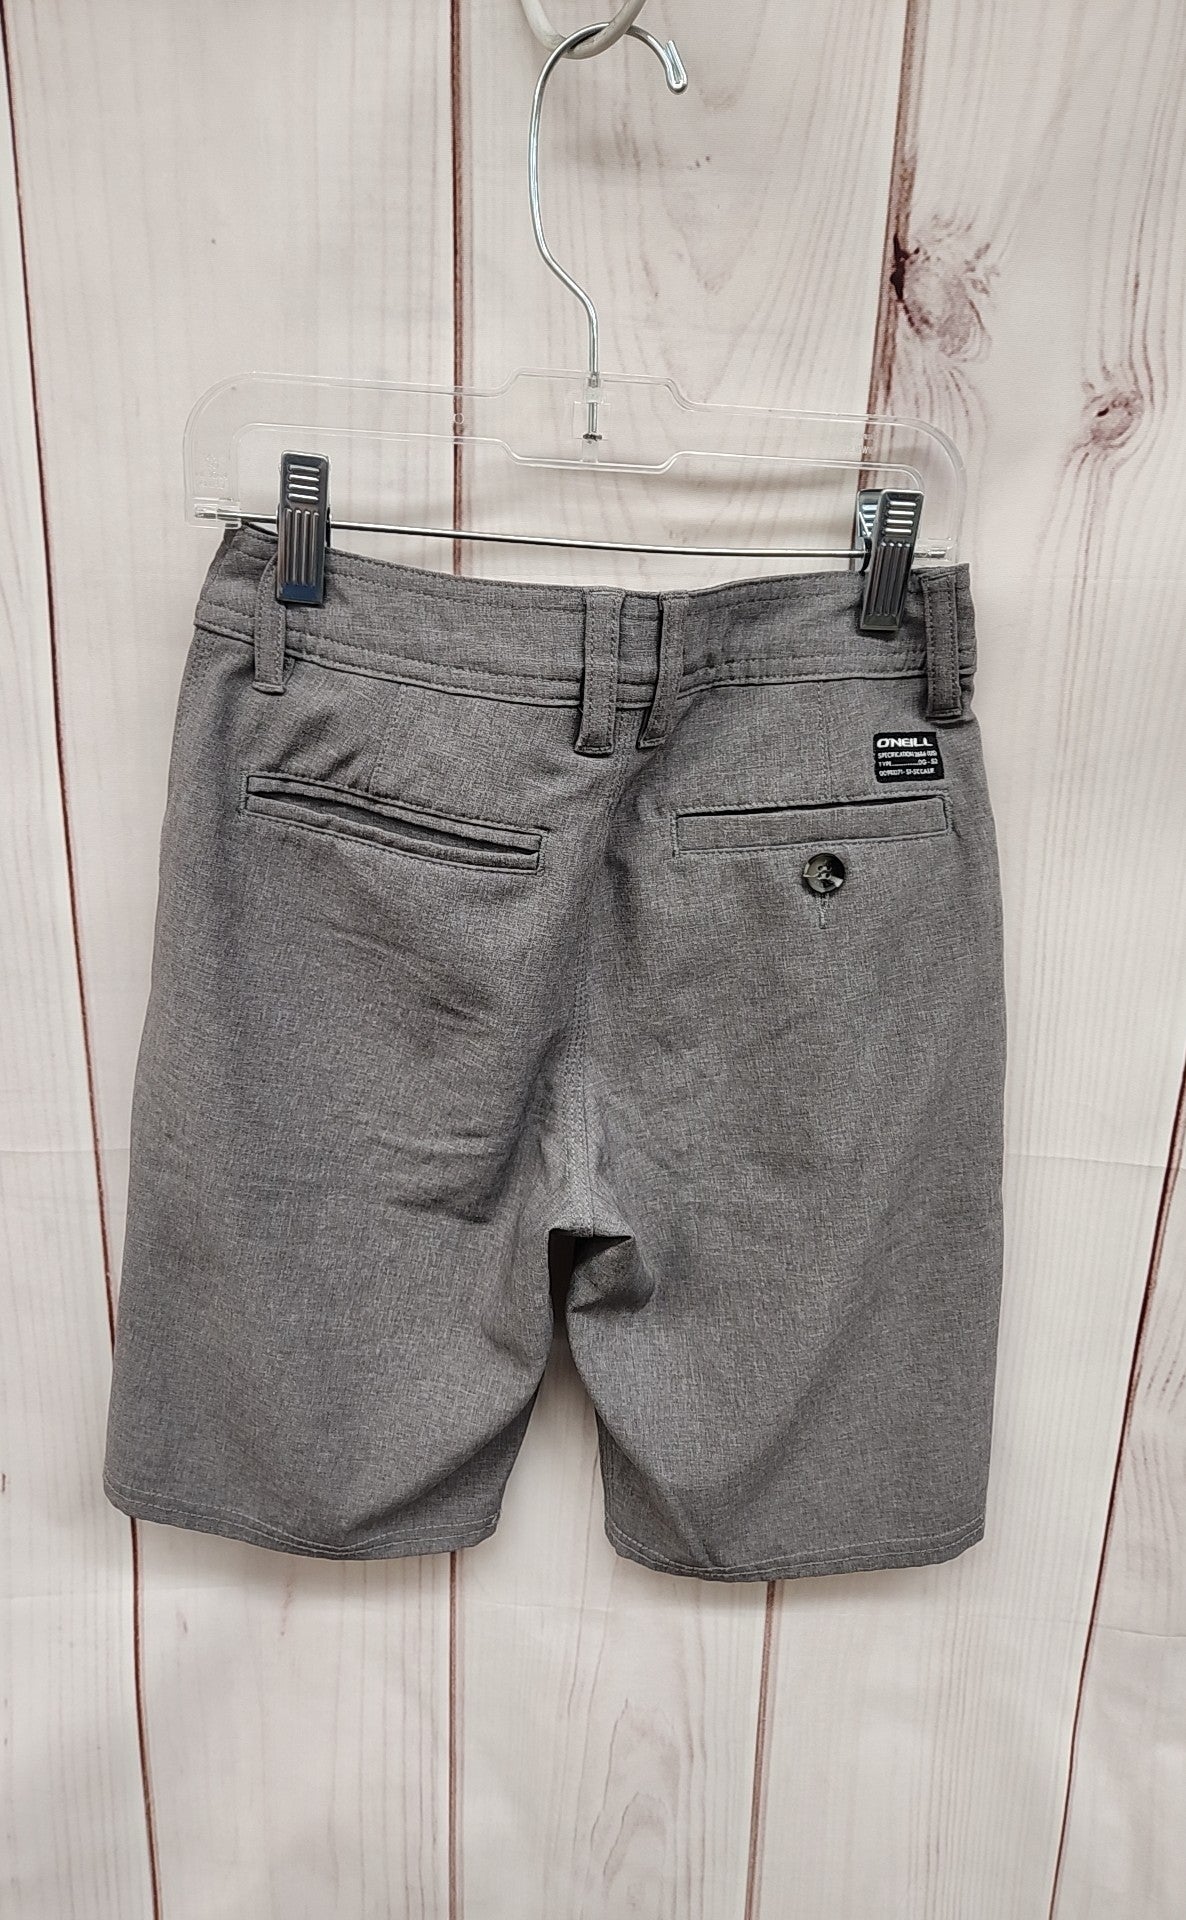 Oneill Boy's Size 8 Gray Shorts 22